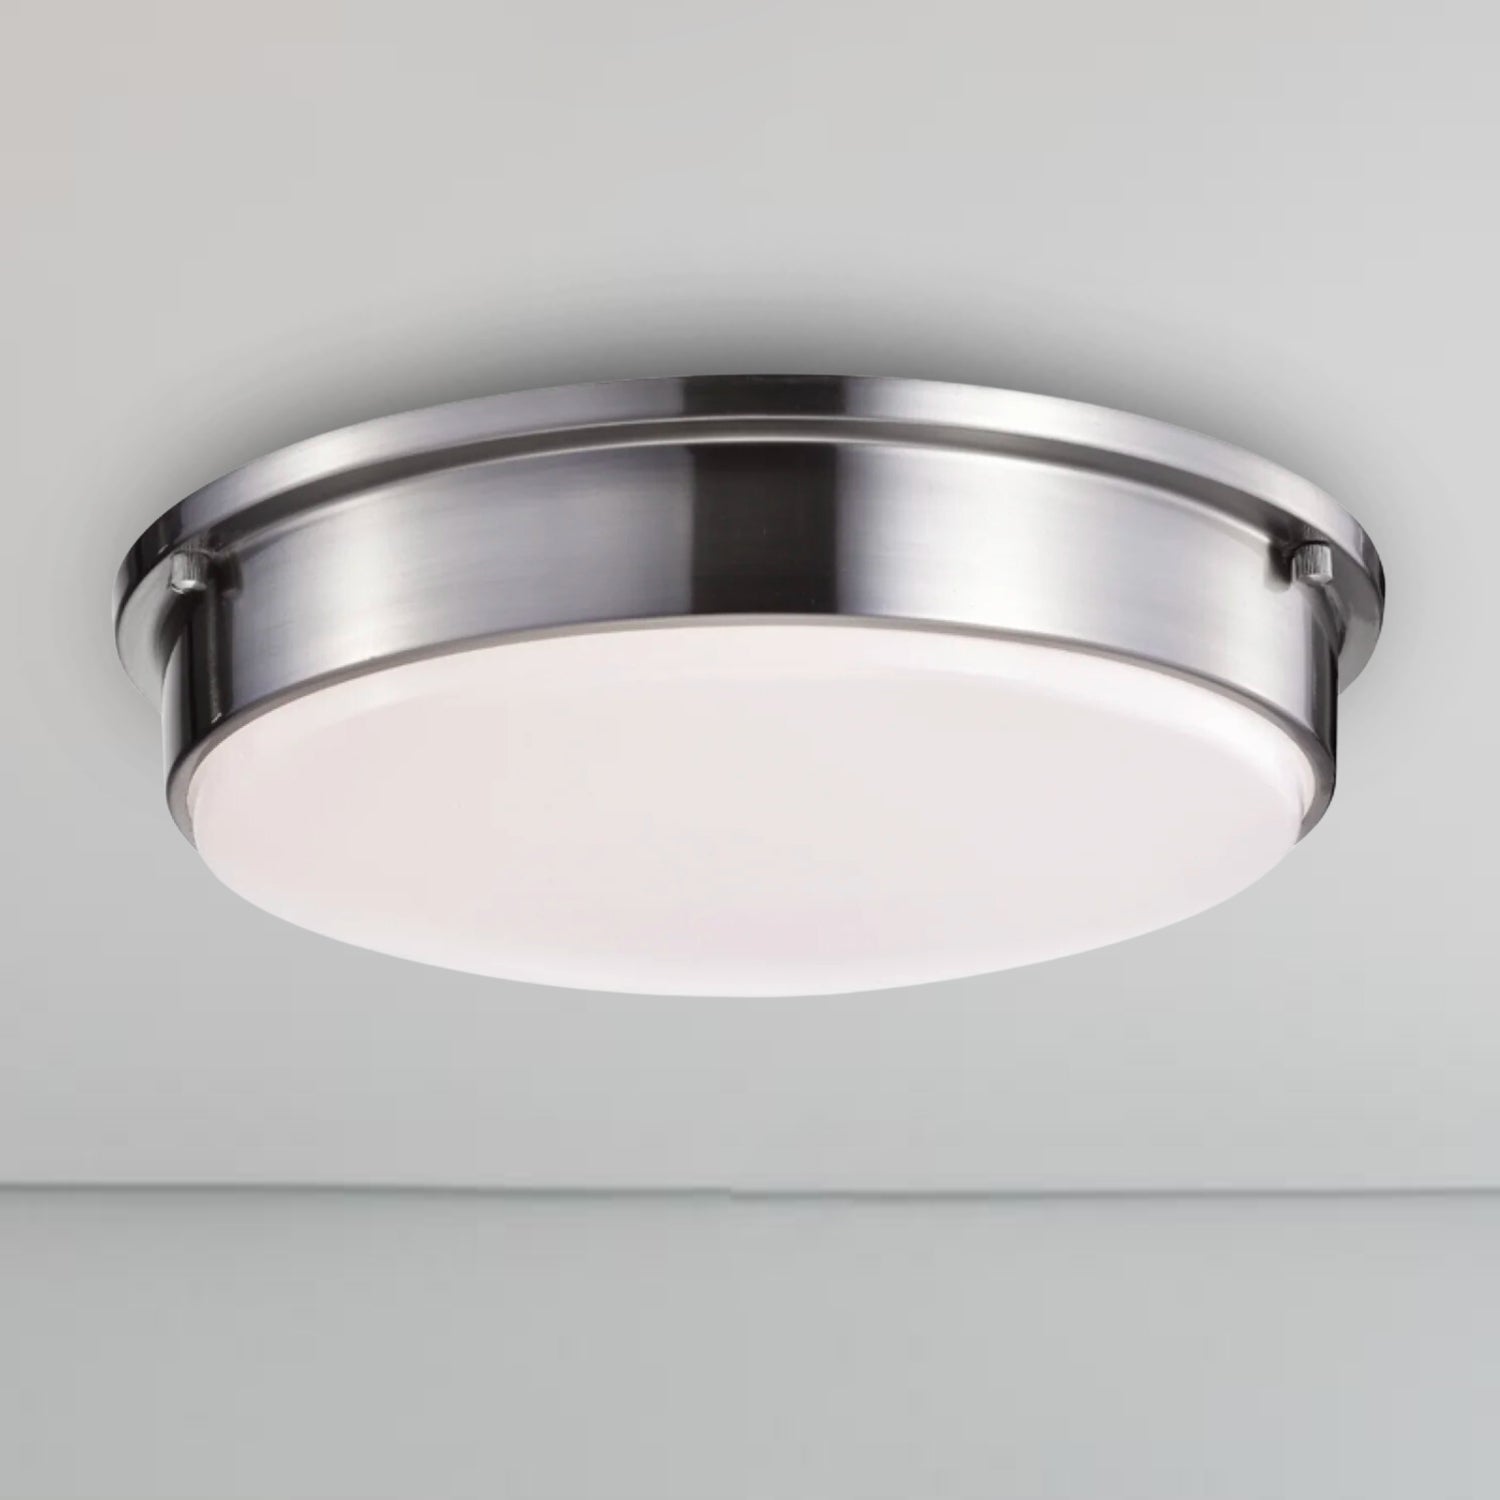 Round LED Satin Nickel Ceiling Light, Klein, Surface Mount, 2100 Lumens